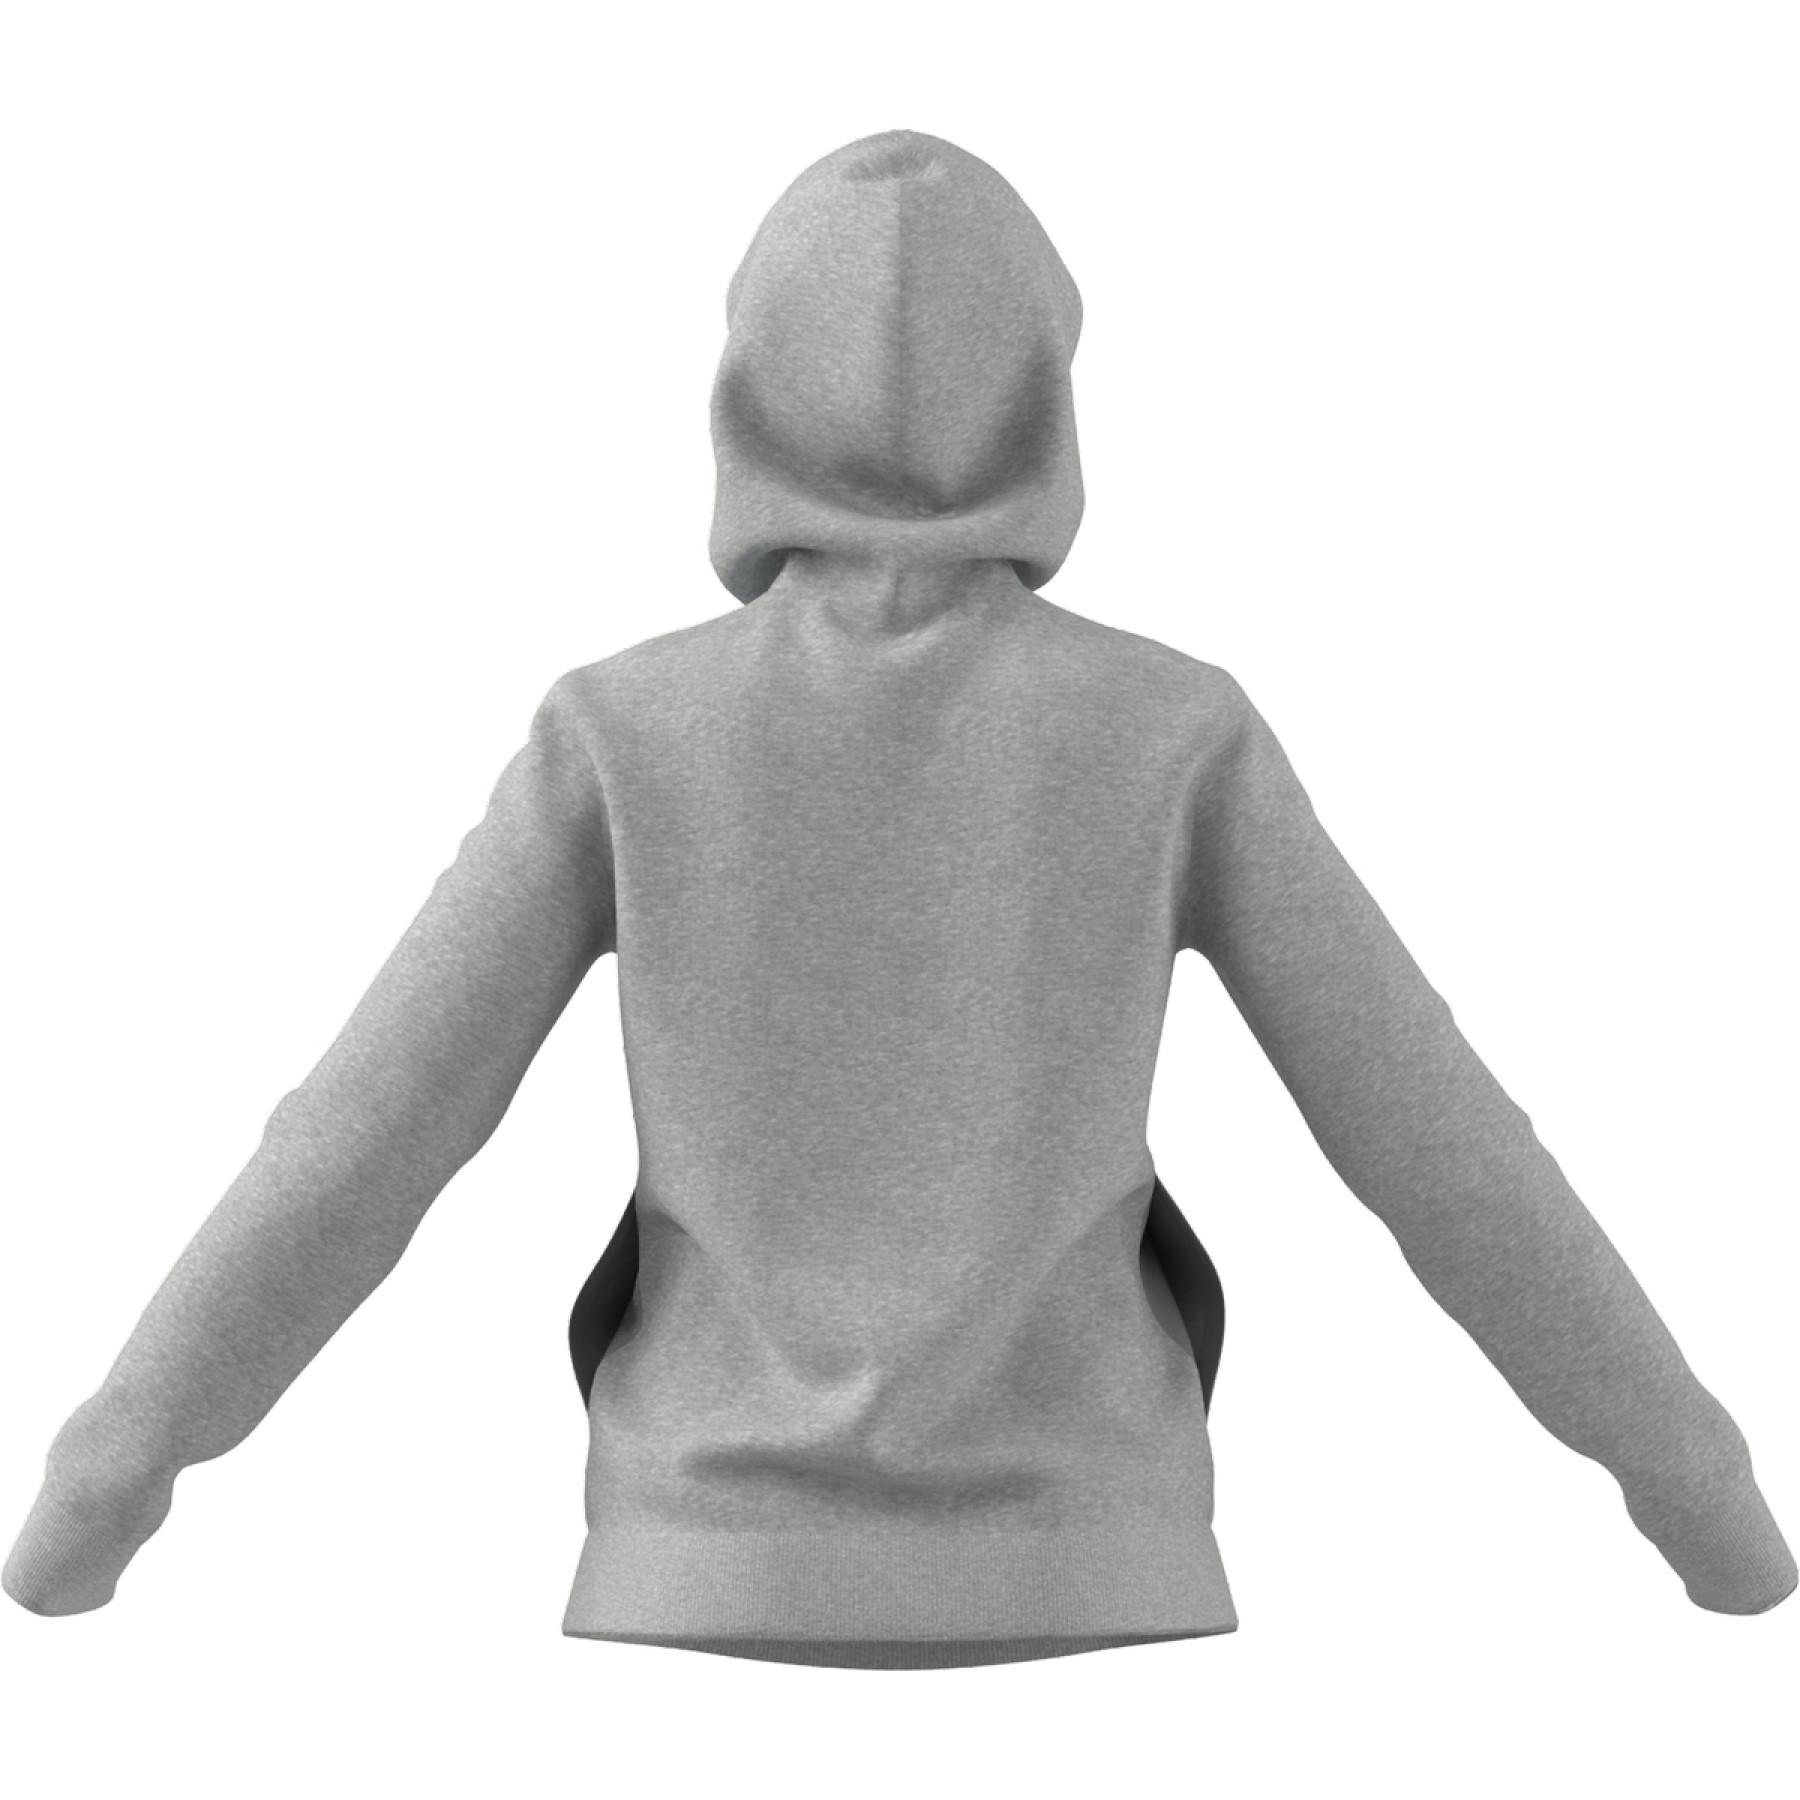 Sweatshirt à capuche femme adidas Essentials Logo Fleece